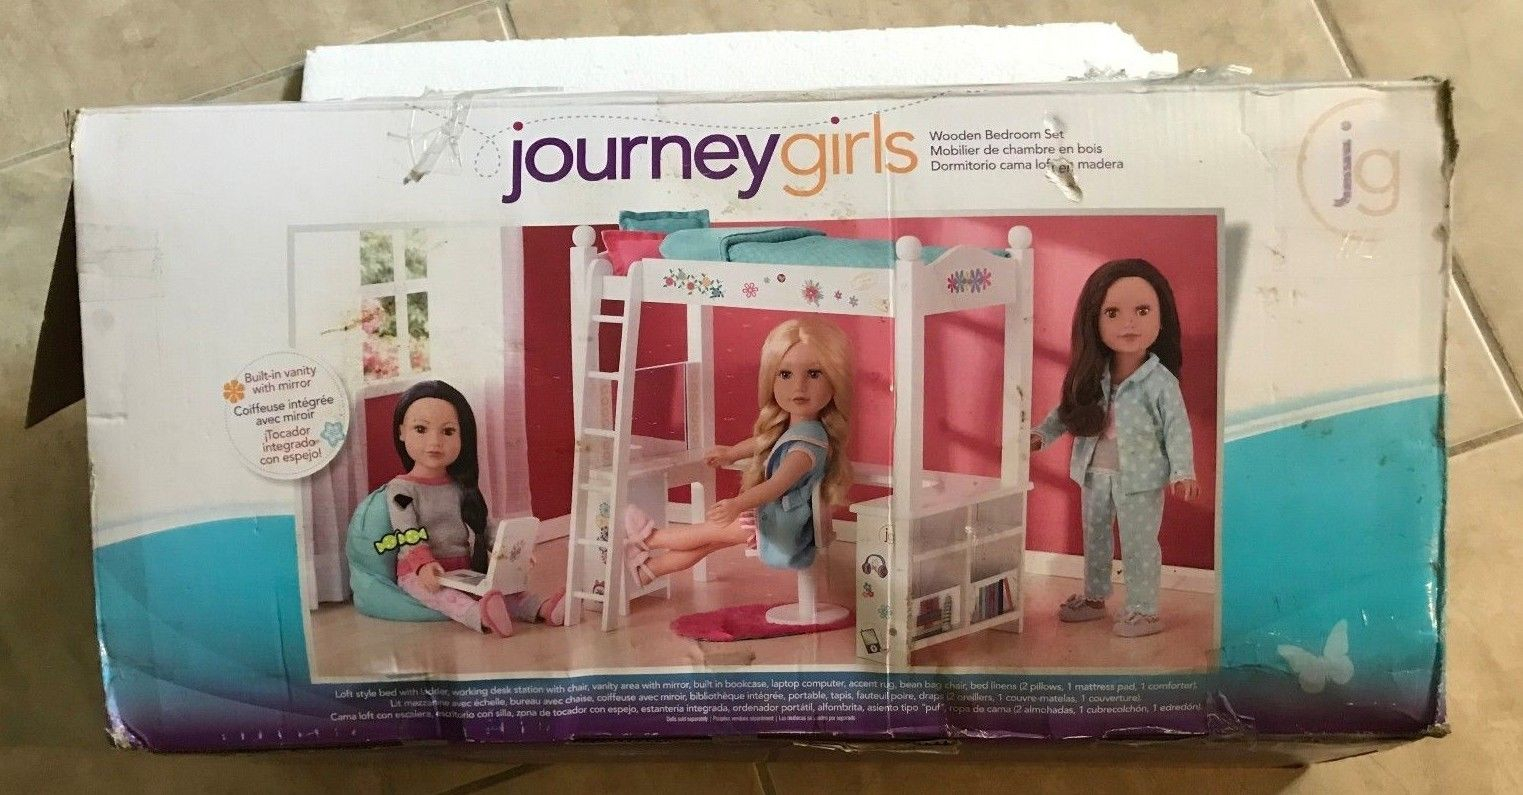 Journey Girls Wooden Bedroom Furniture Loft Bed Desk Set Toysrus Exclusive throughout size 1523 X 795